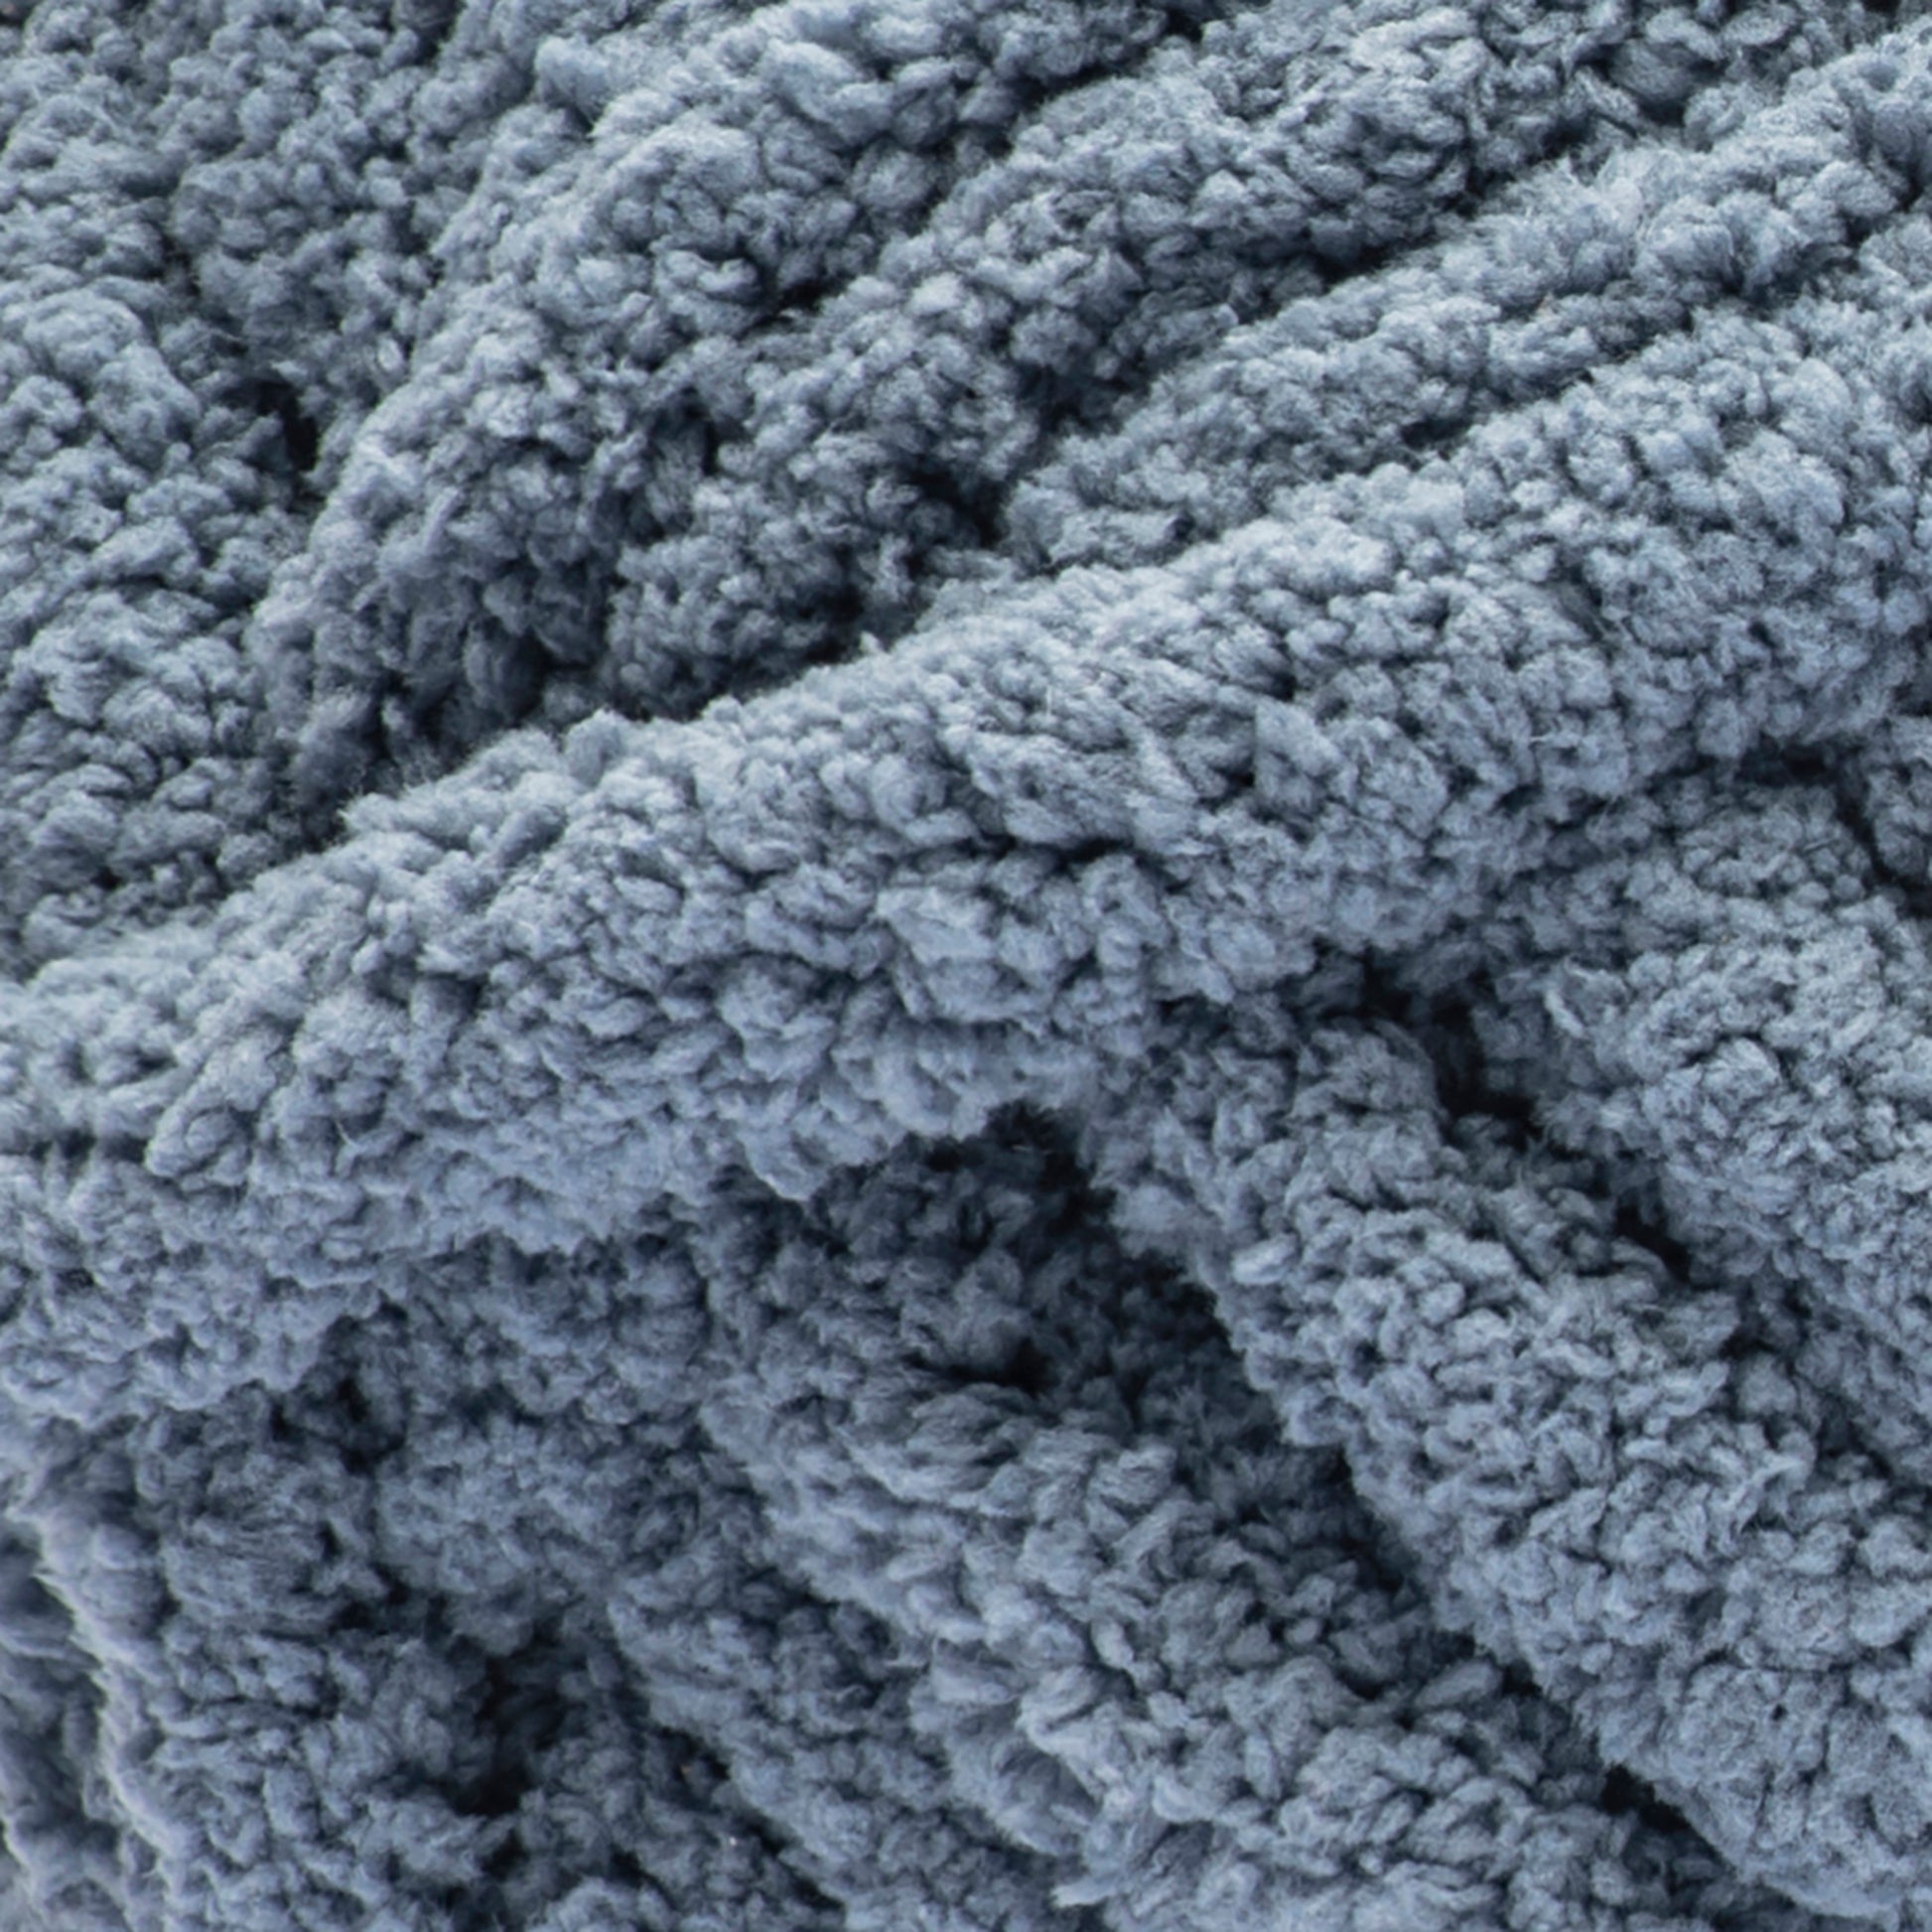  Bernat Blanket Extra Thick Coal Yarn - 1 Pack of 600g/21oz -  Polyester - 7 Jumbo - Knitting, Crocheting, Crafts & Amigurumi, Chunky  Chenille Yarn : Everything Else